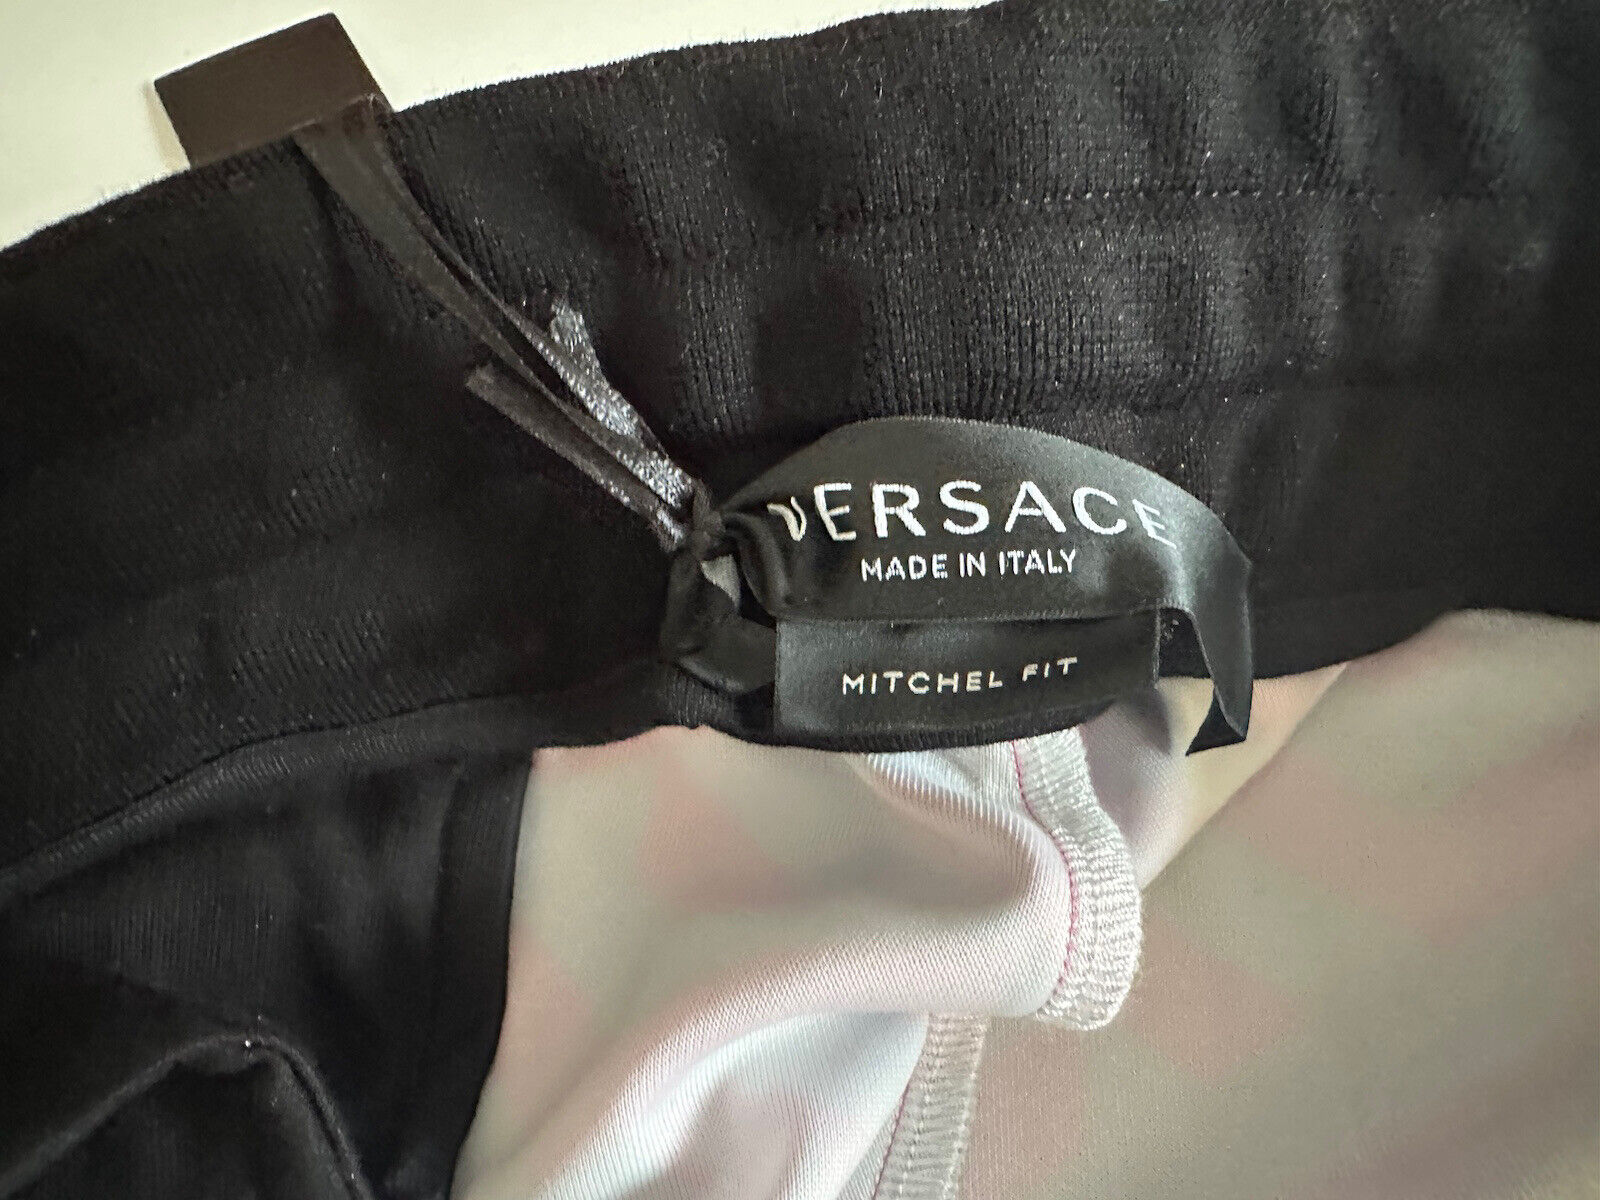 NWT 1295 долларов Versace Спортивные брюки Mitchel Fit с греческим логотипом Versace L 1004707 